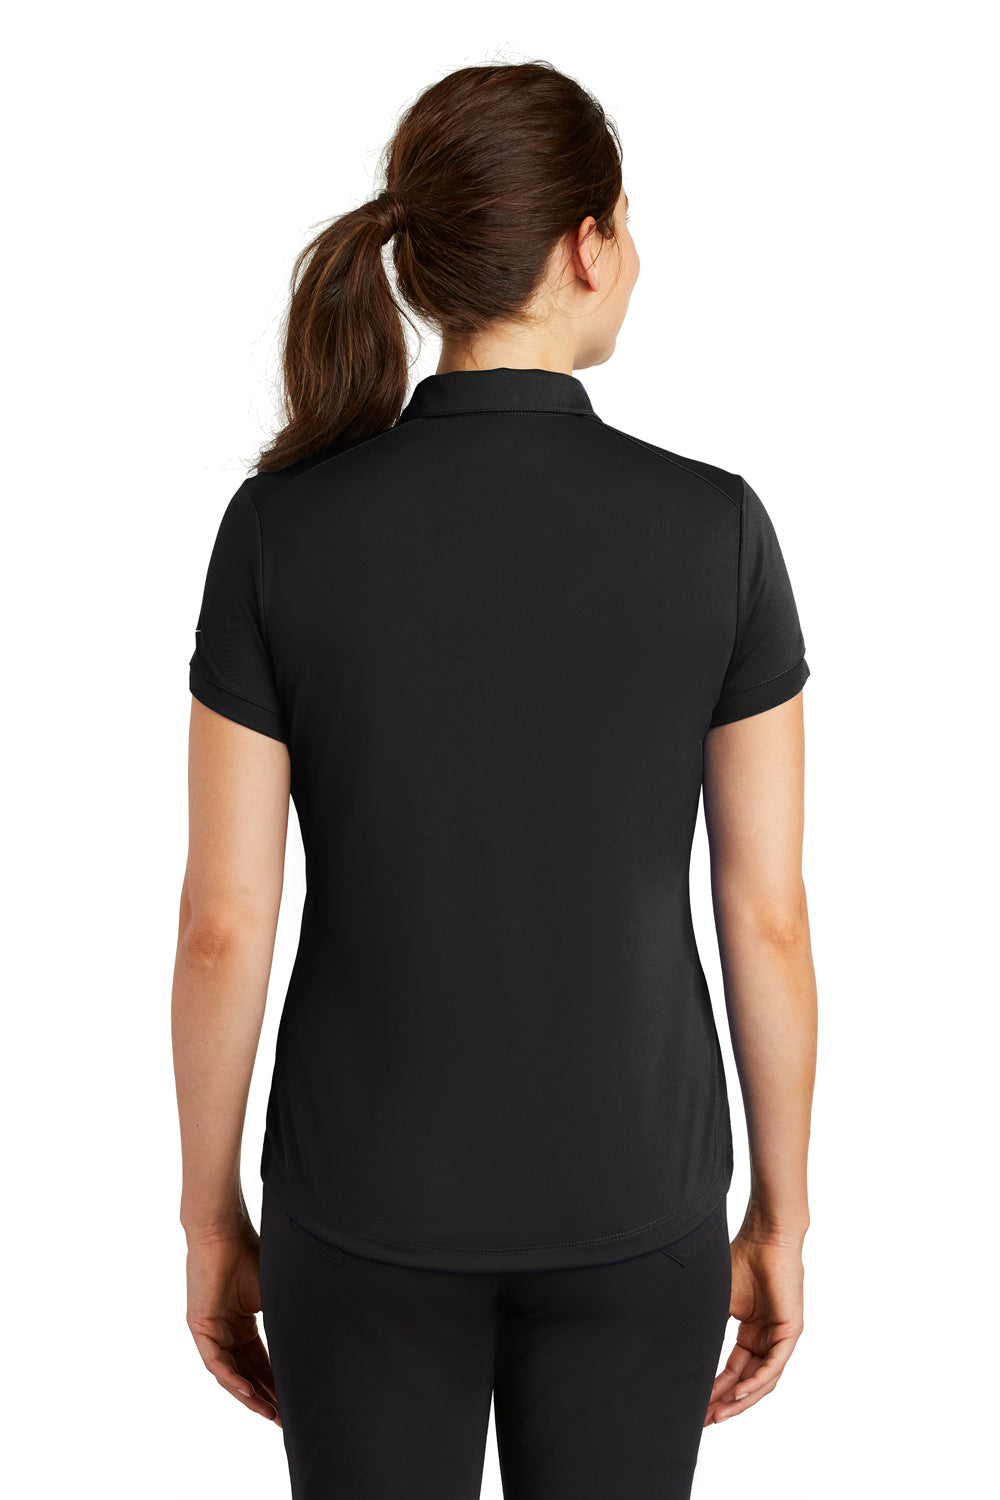 Nike 811807 Womens Players Dri-Fit Moisture Wicking Short Sleeve Polo Shirt Black Model Back